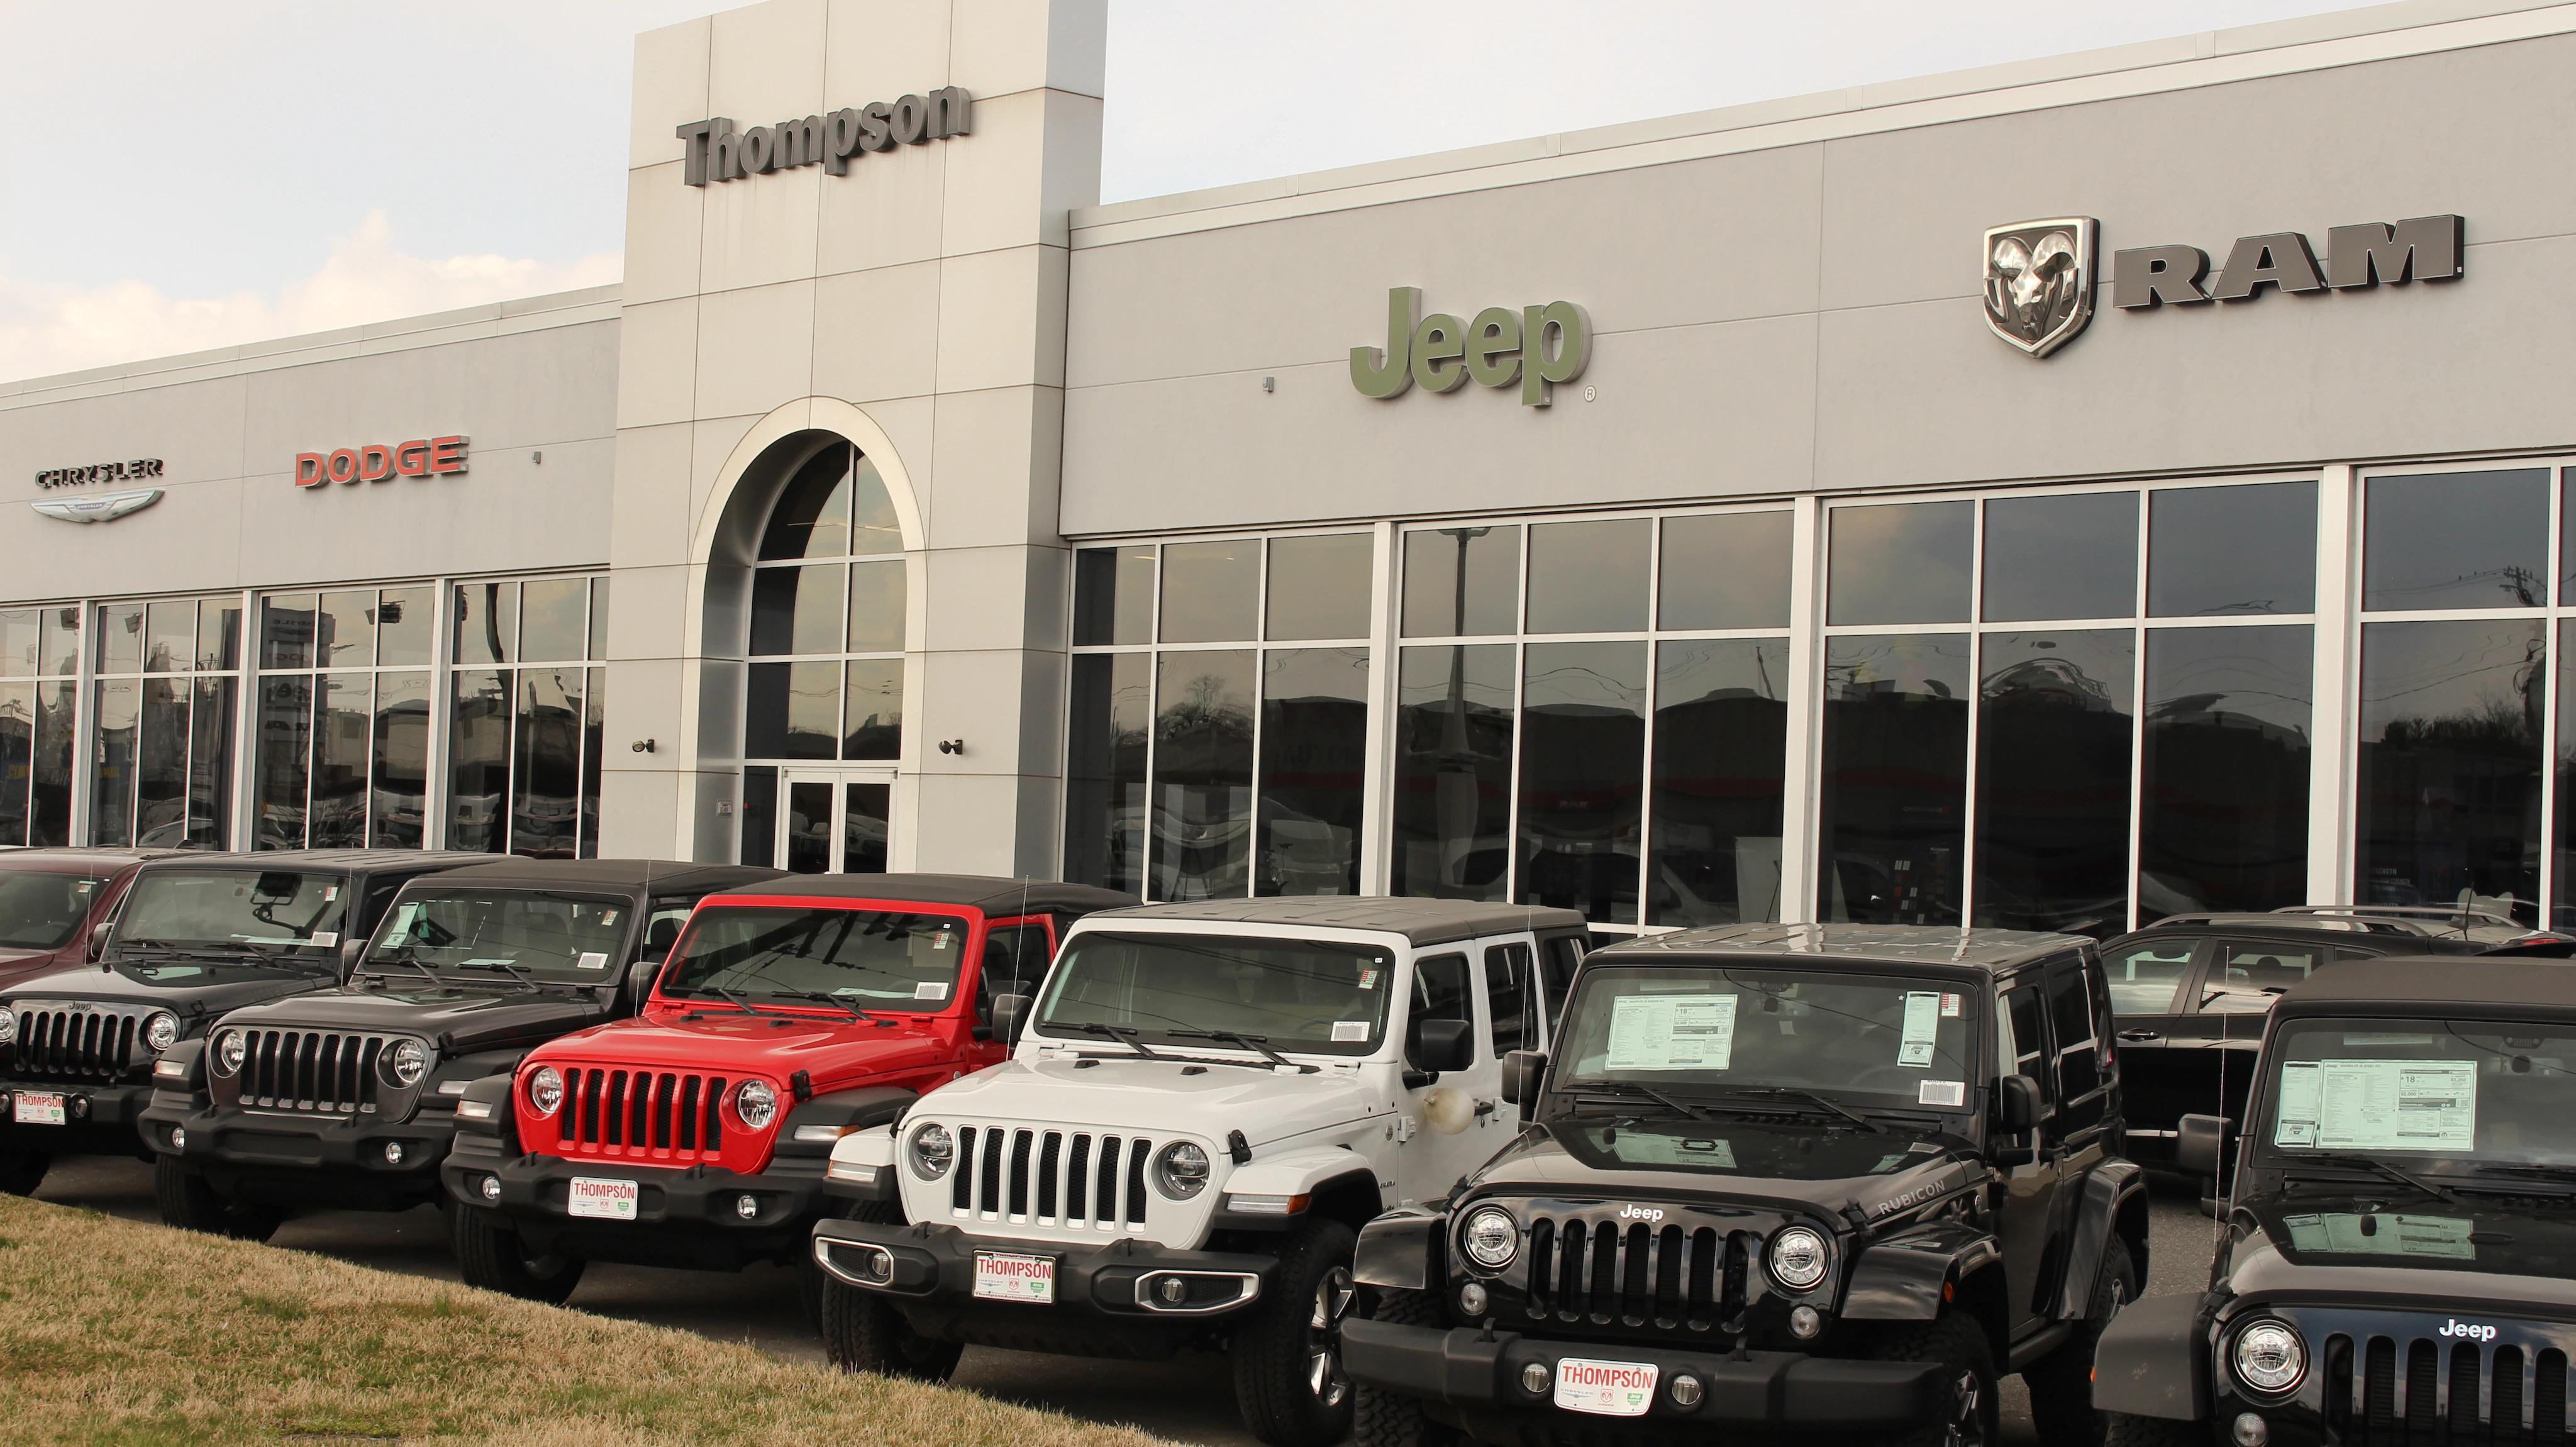 Thompson Chrysler, Dodge, Jeep, Ram Baltimore Photo